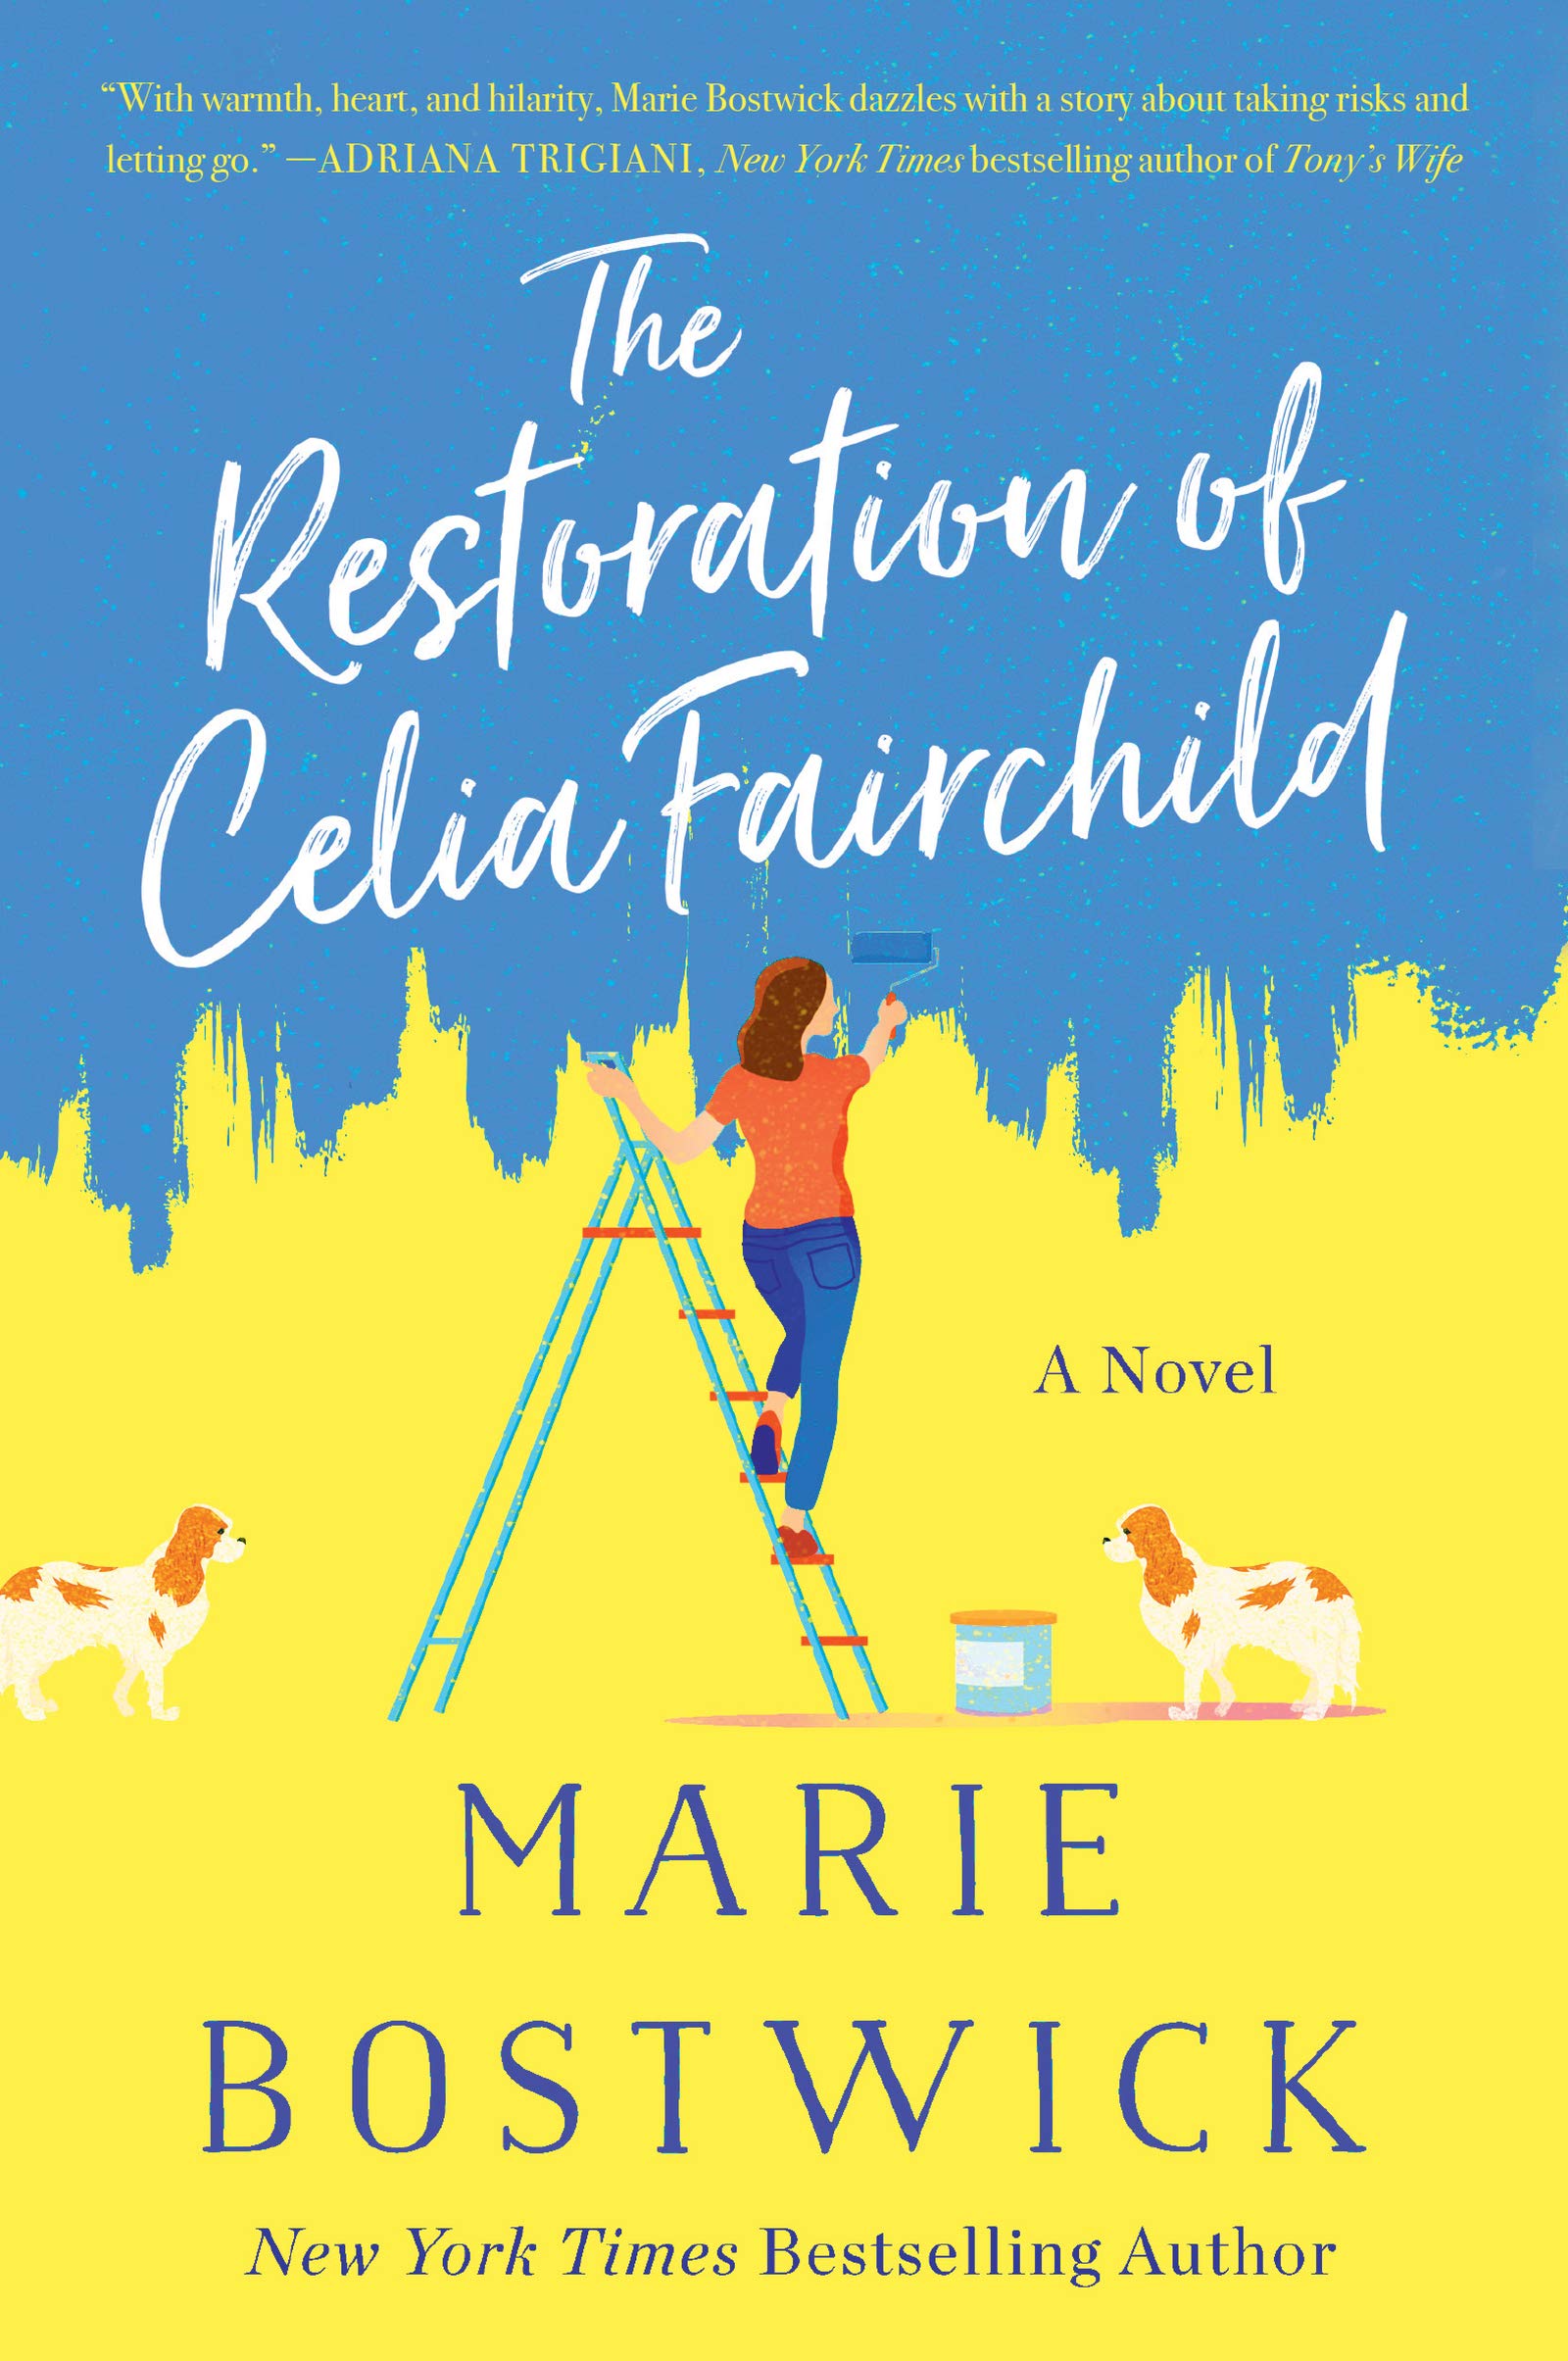 Image for "The Restoration of Celia Fairchild"